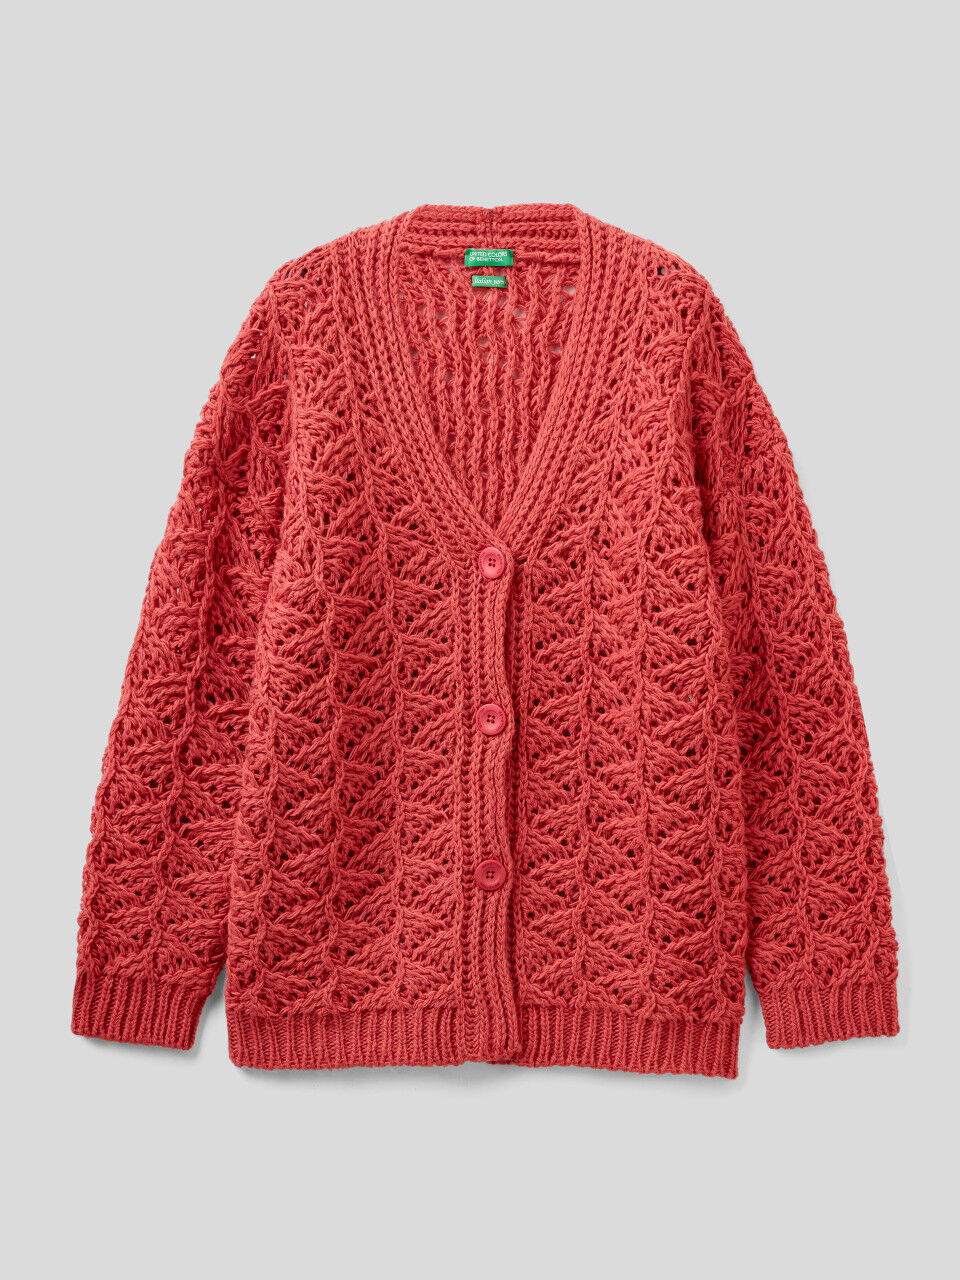 United Colors of Benetton Girl's Maglia Coreana M/L Cardigan Sweater 